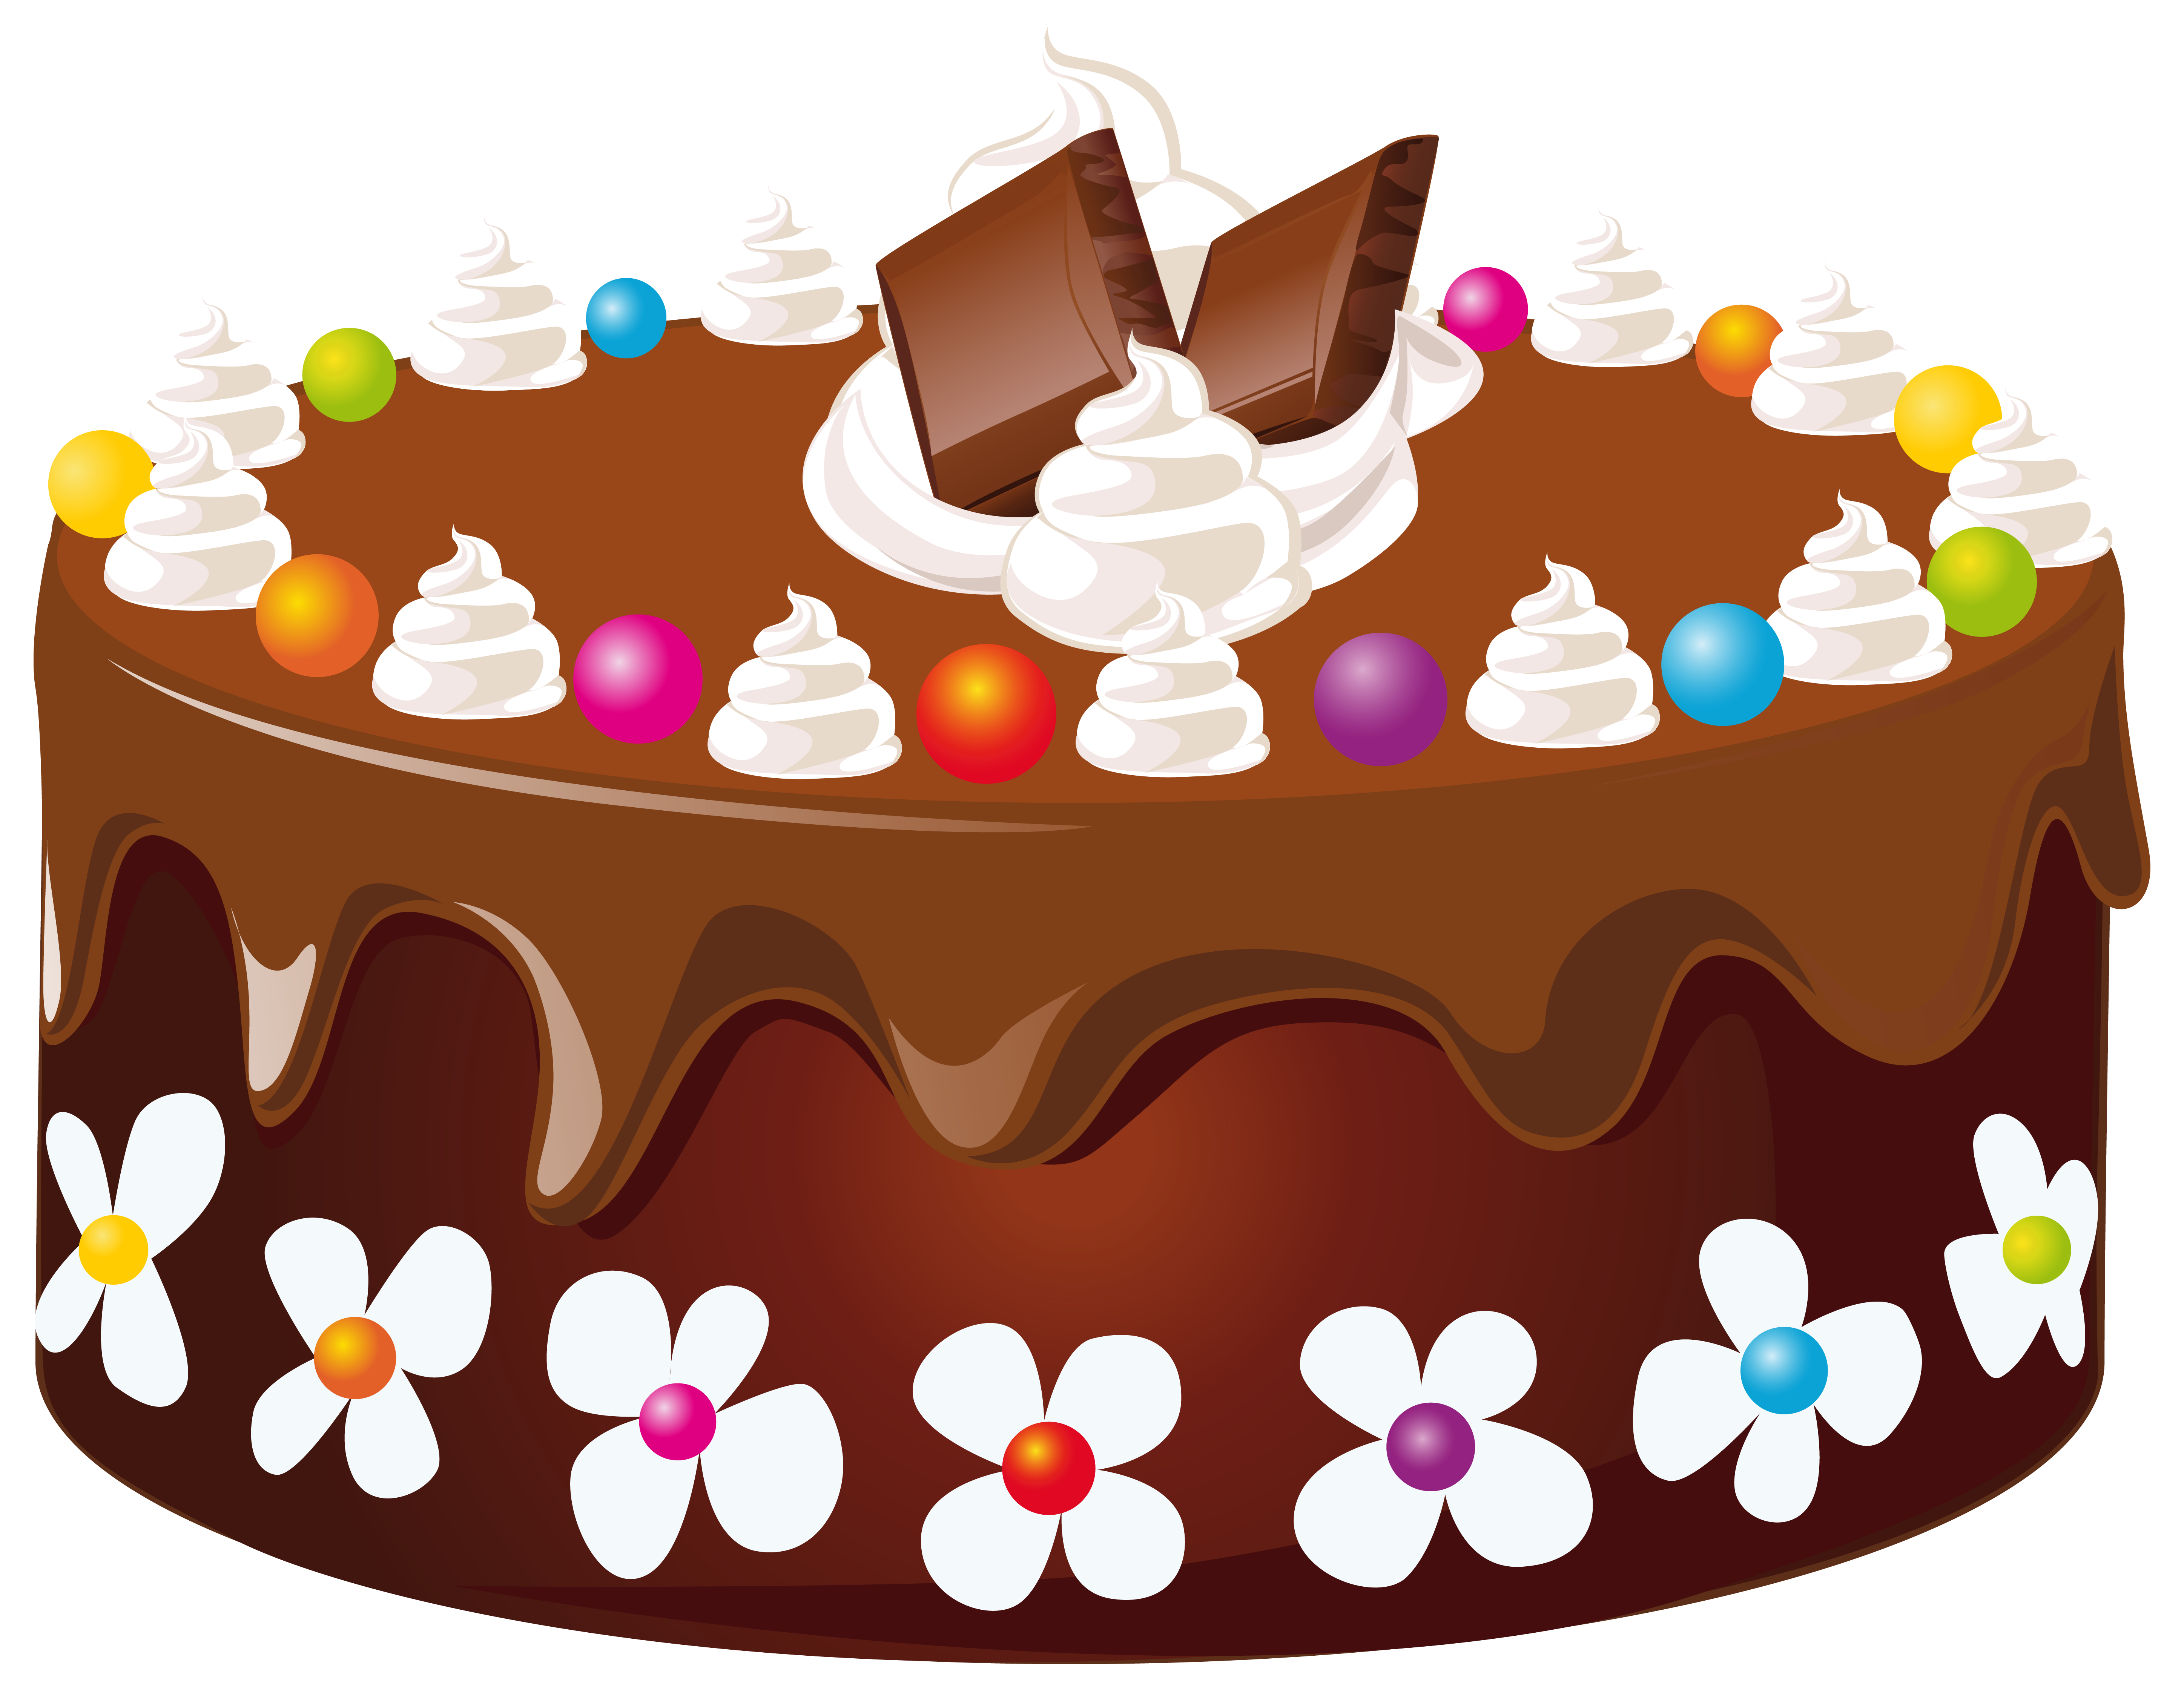 Chocolate cake close up | Stock image | Colourbox